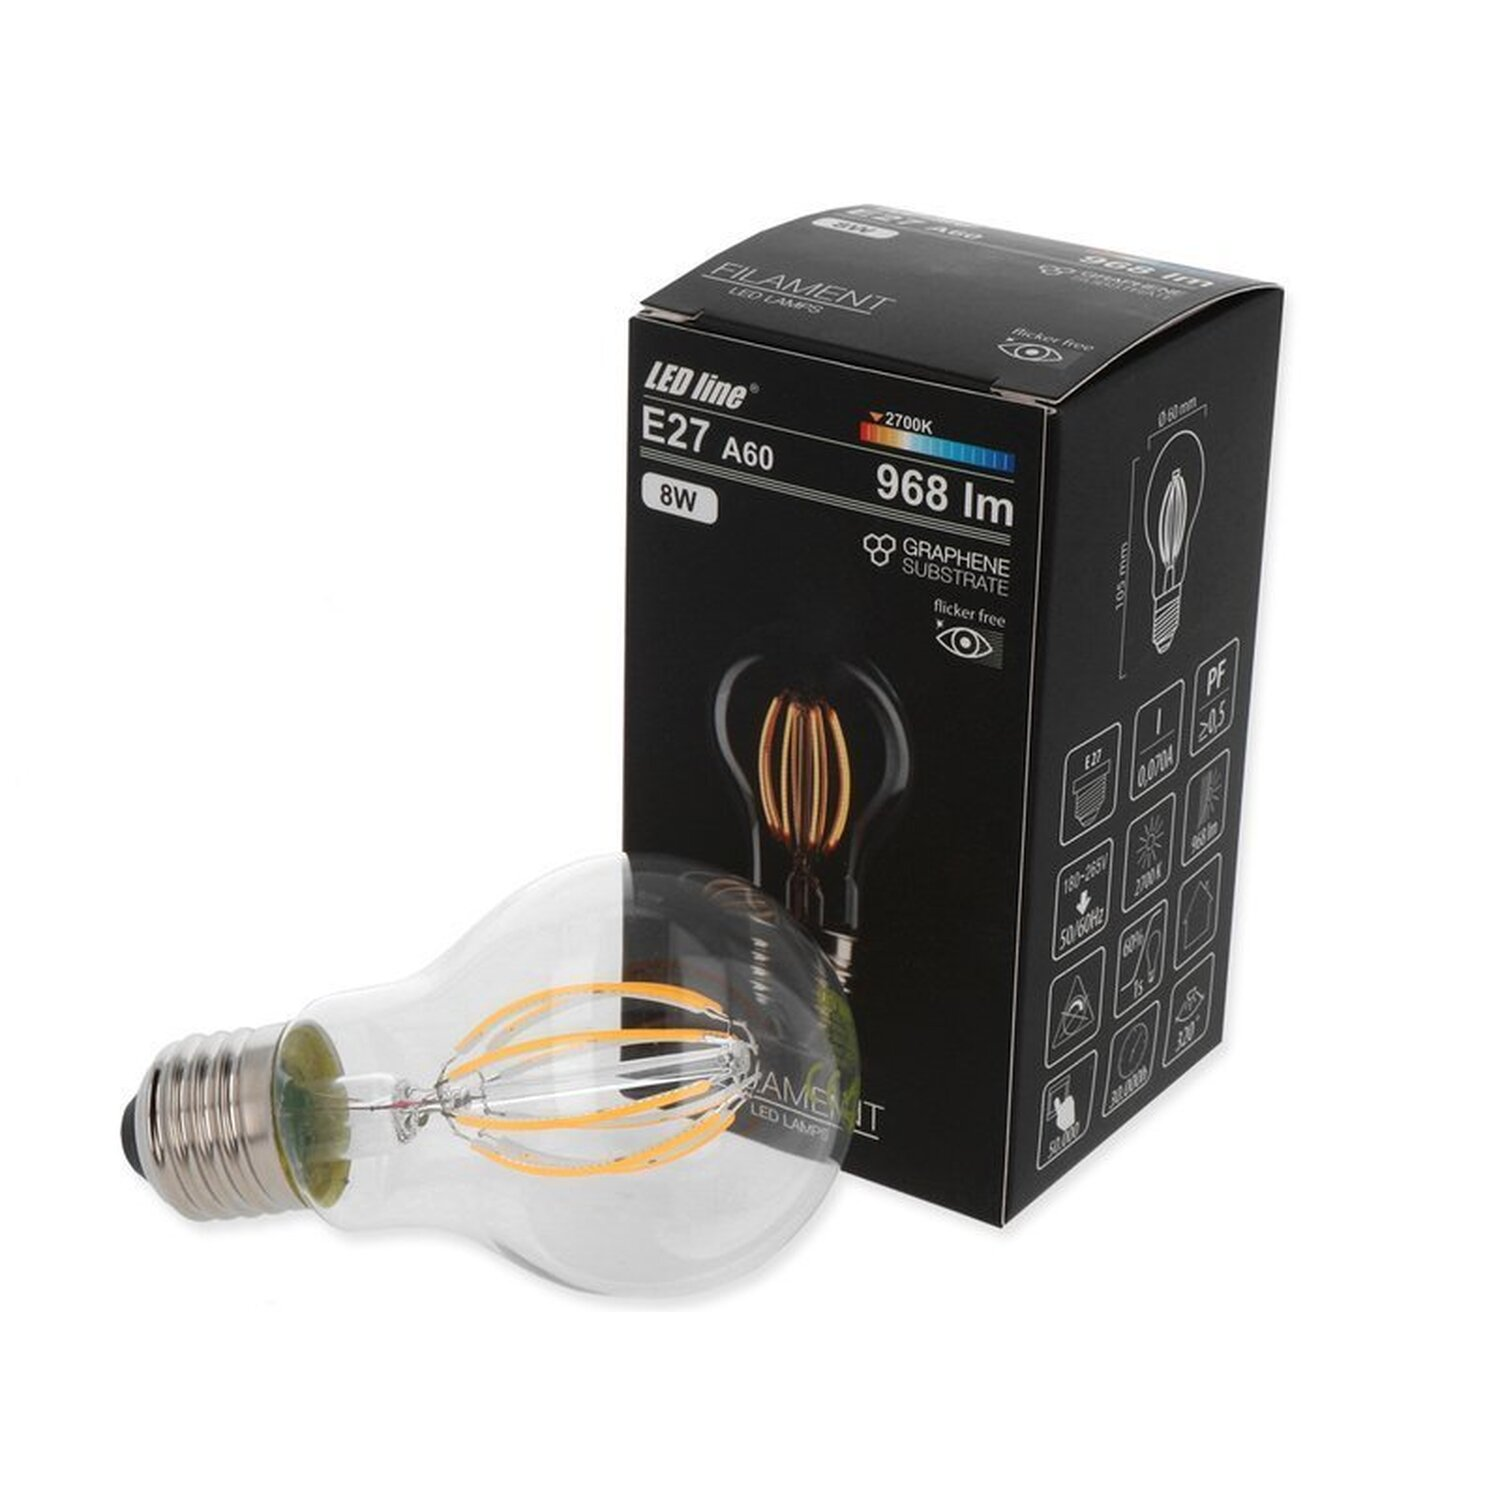 LED LINE E27 8W LED 968 A60 lm LED Neutralweiß Leuchtmittel Dimmbar Glühbirne Ø60mm Filament